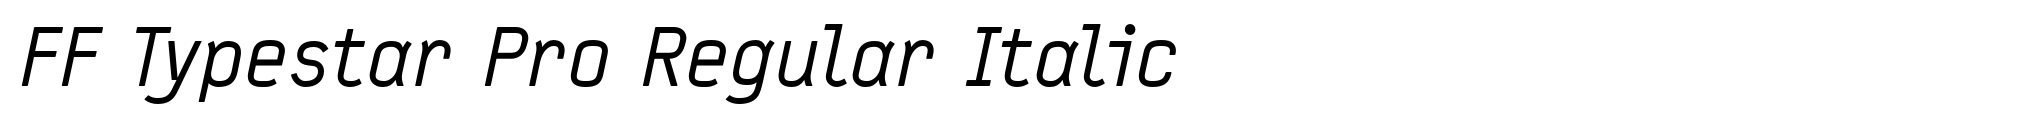 FF Typestar Pro Regular Italic image